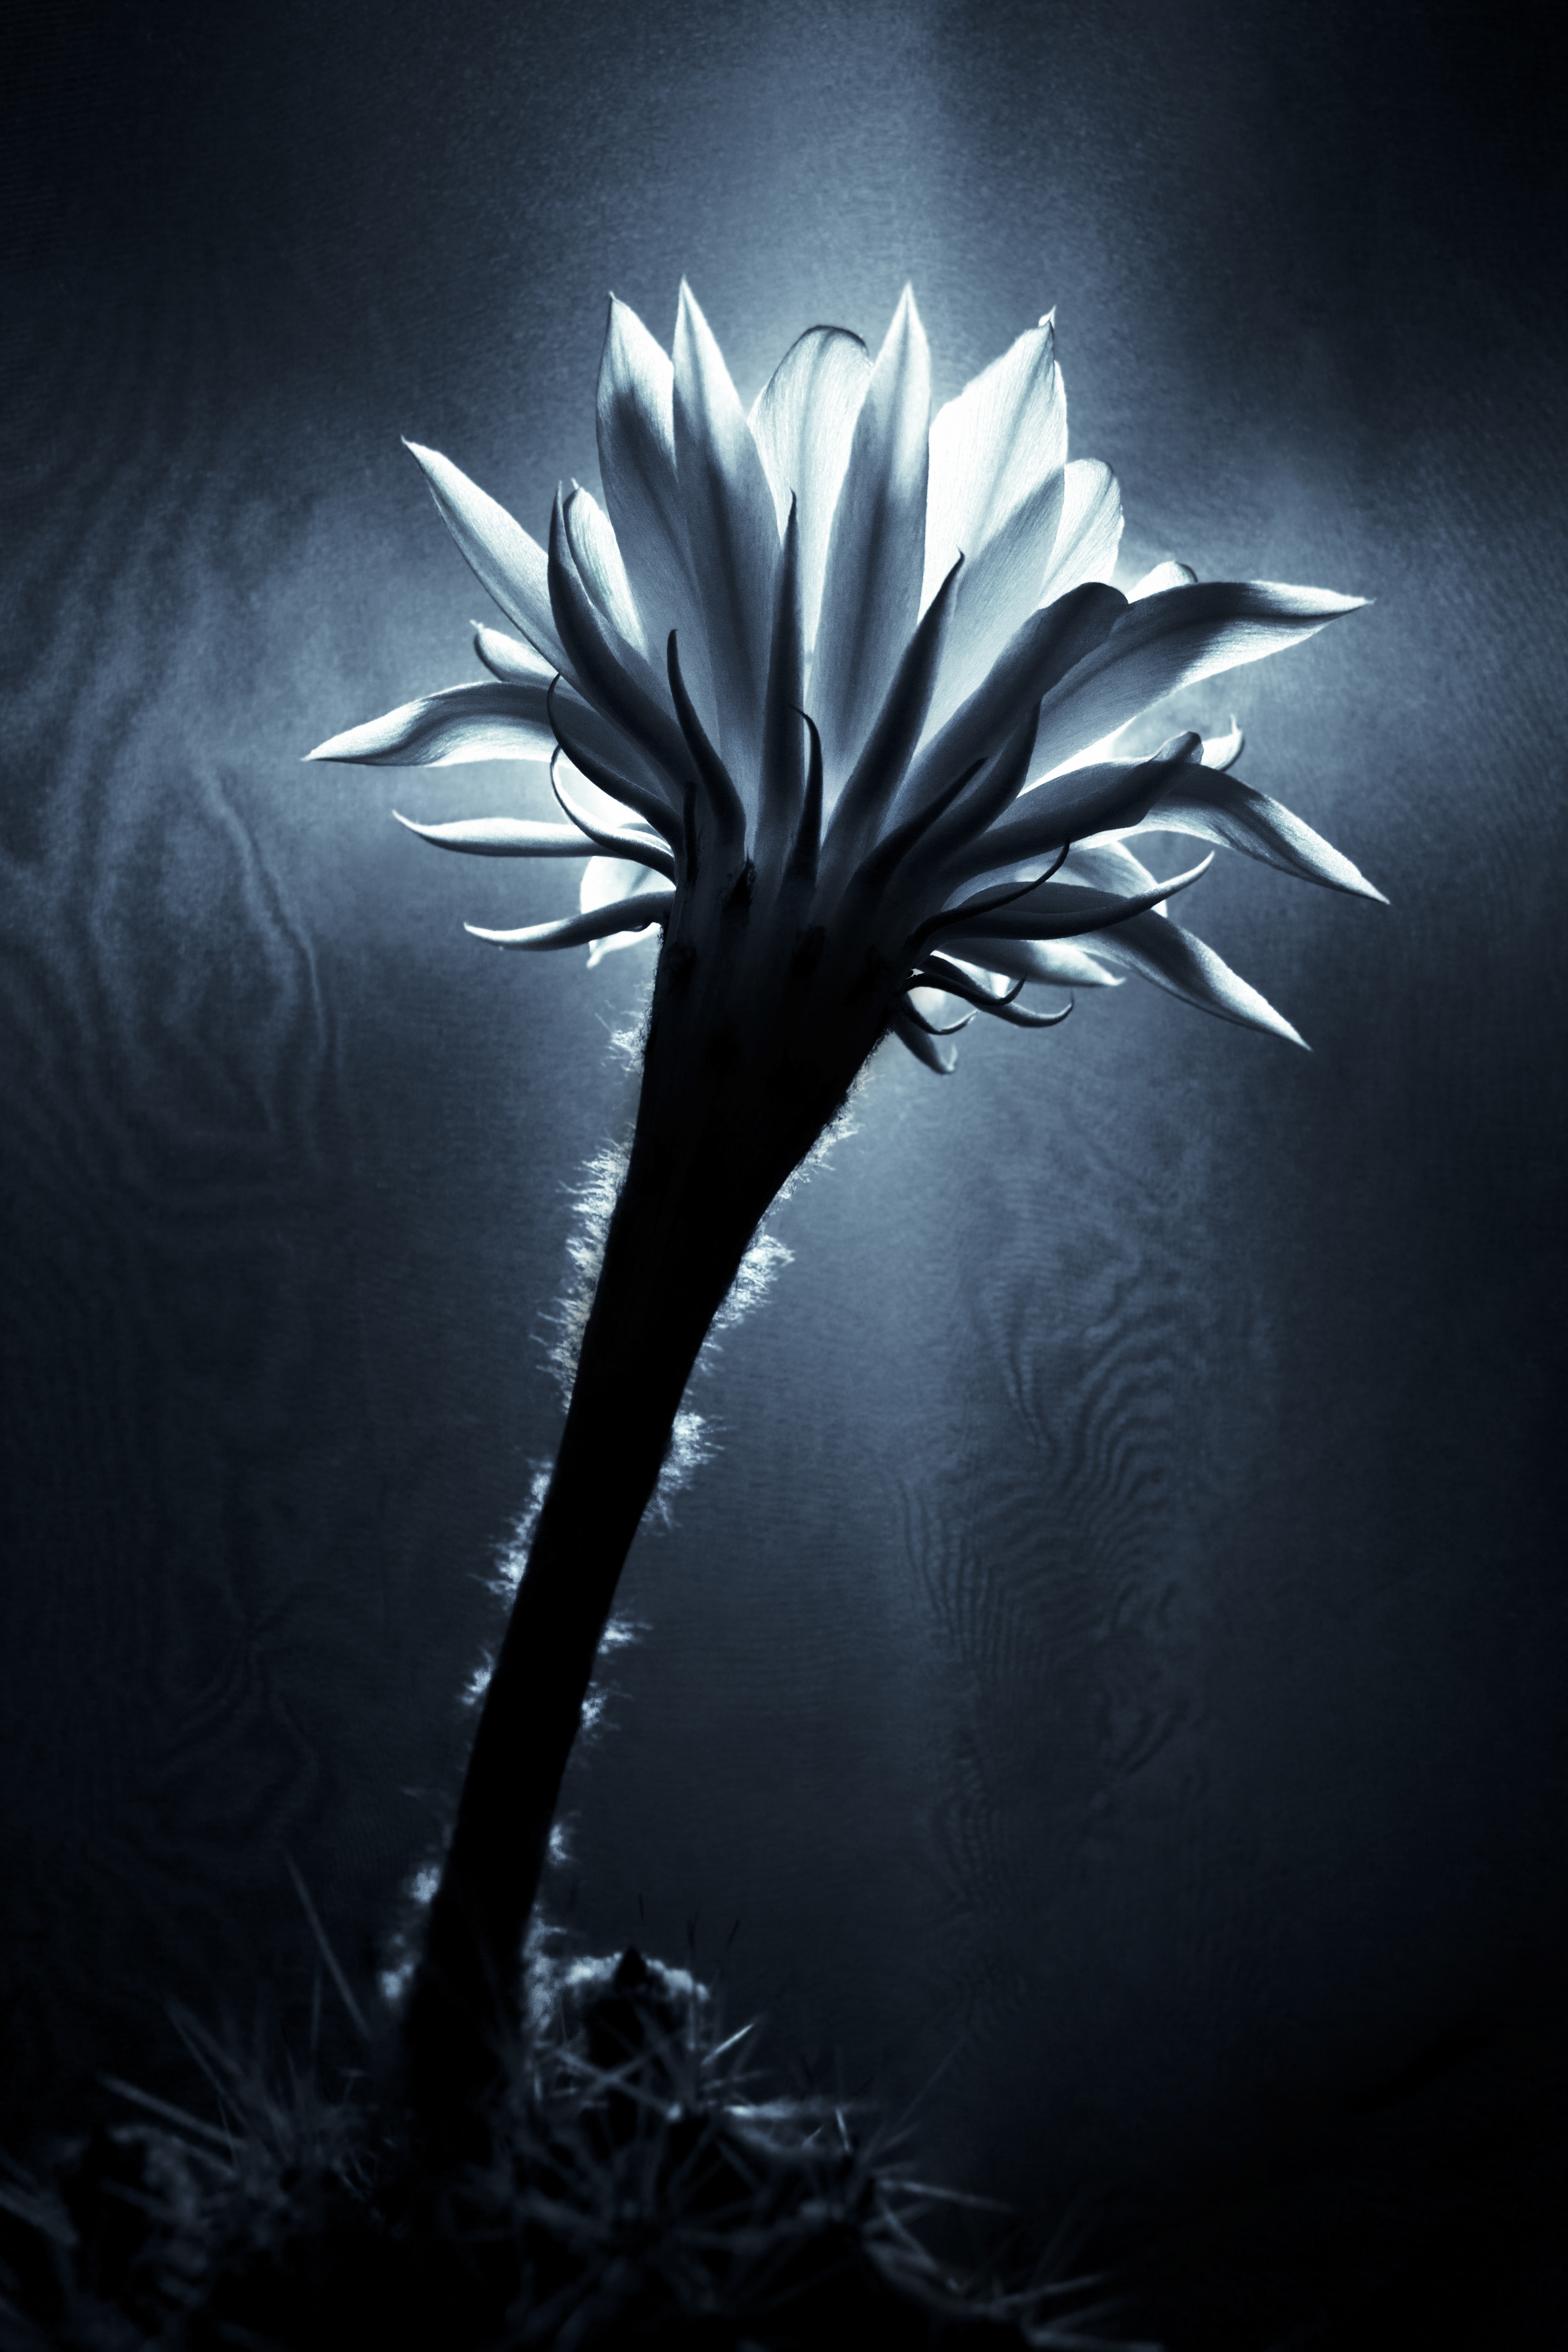 Ephemeral Echinopsis Eyriesii. Ph. Anna Laviosa, © 2017